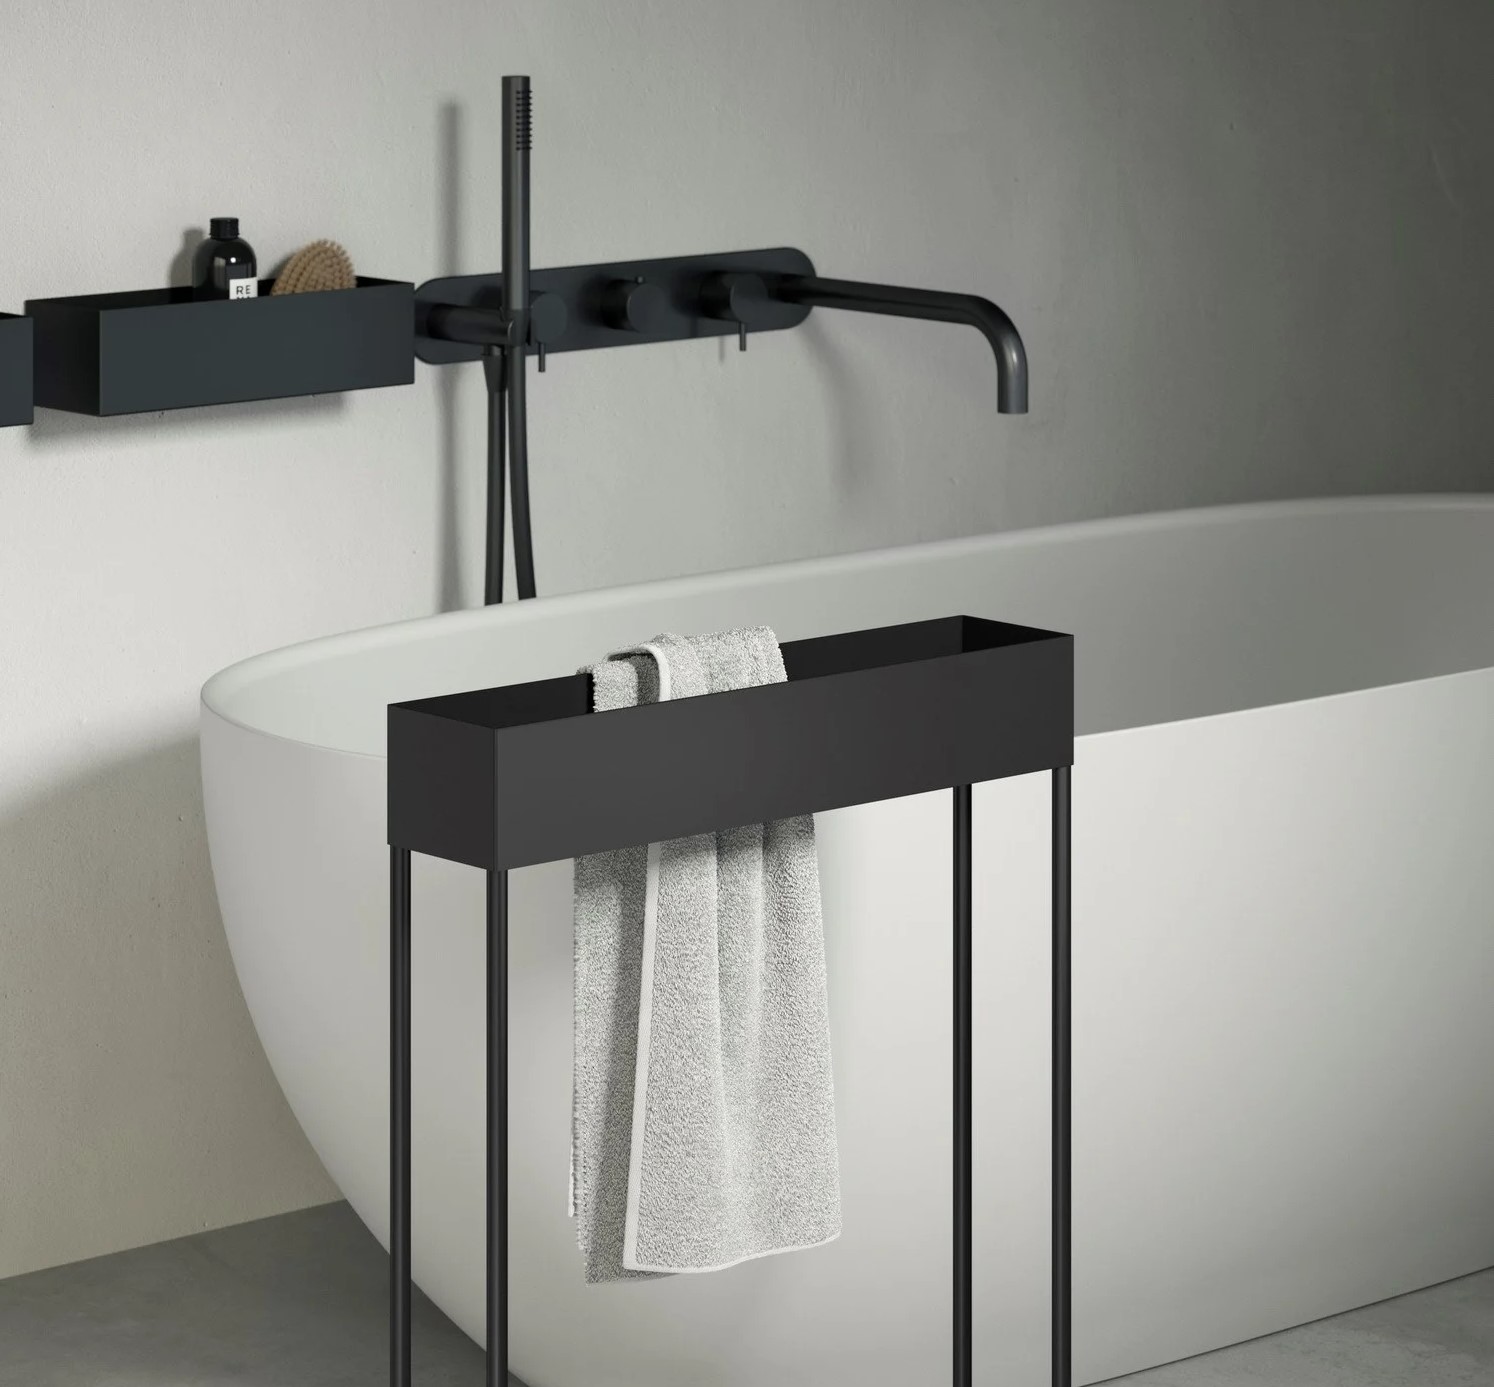 HOLE-Freestanding-bathtub-Rexa-Design-544220-rel43cb6d49